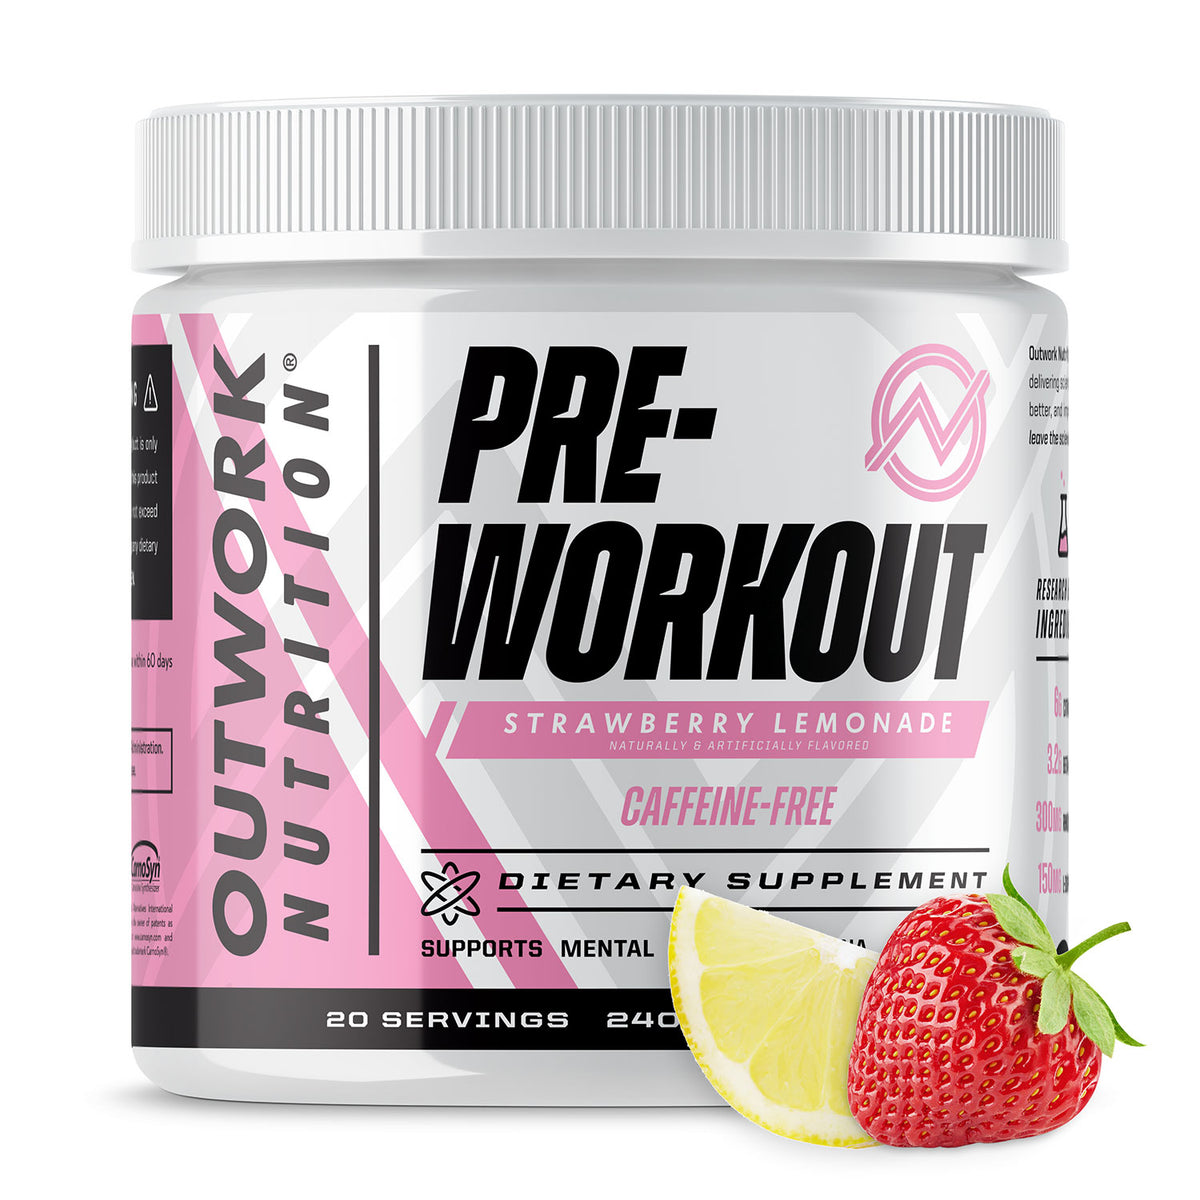 caffeine-free pre-workout strawberry lemonade flavor